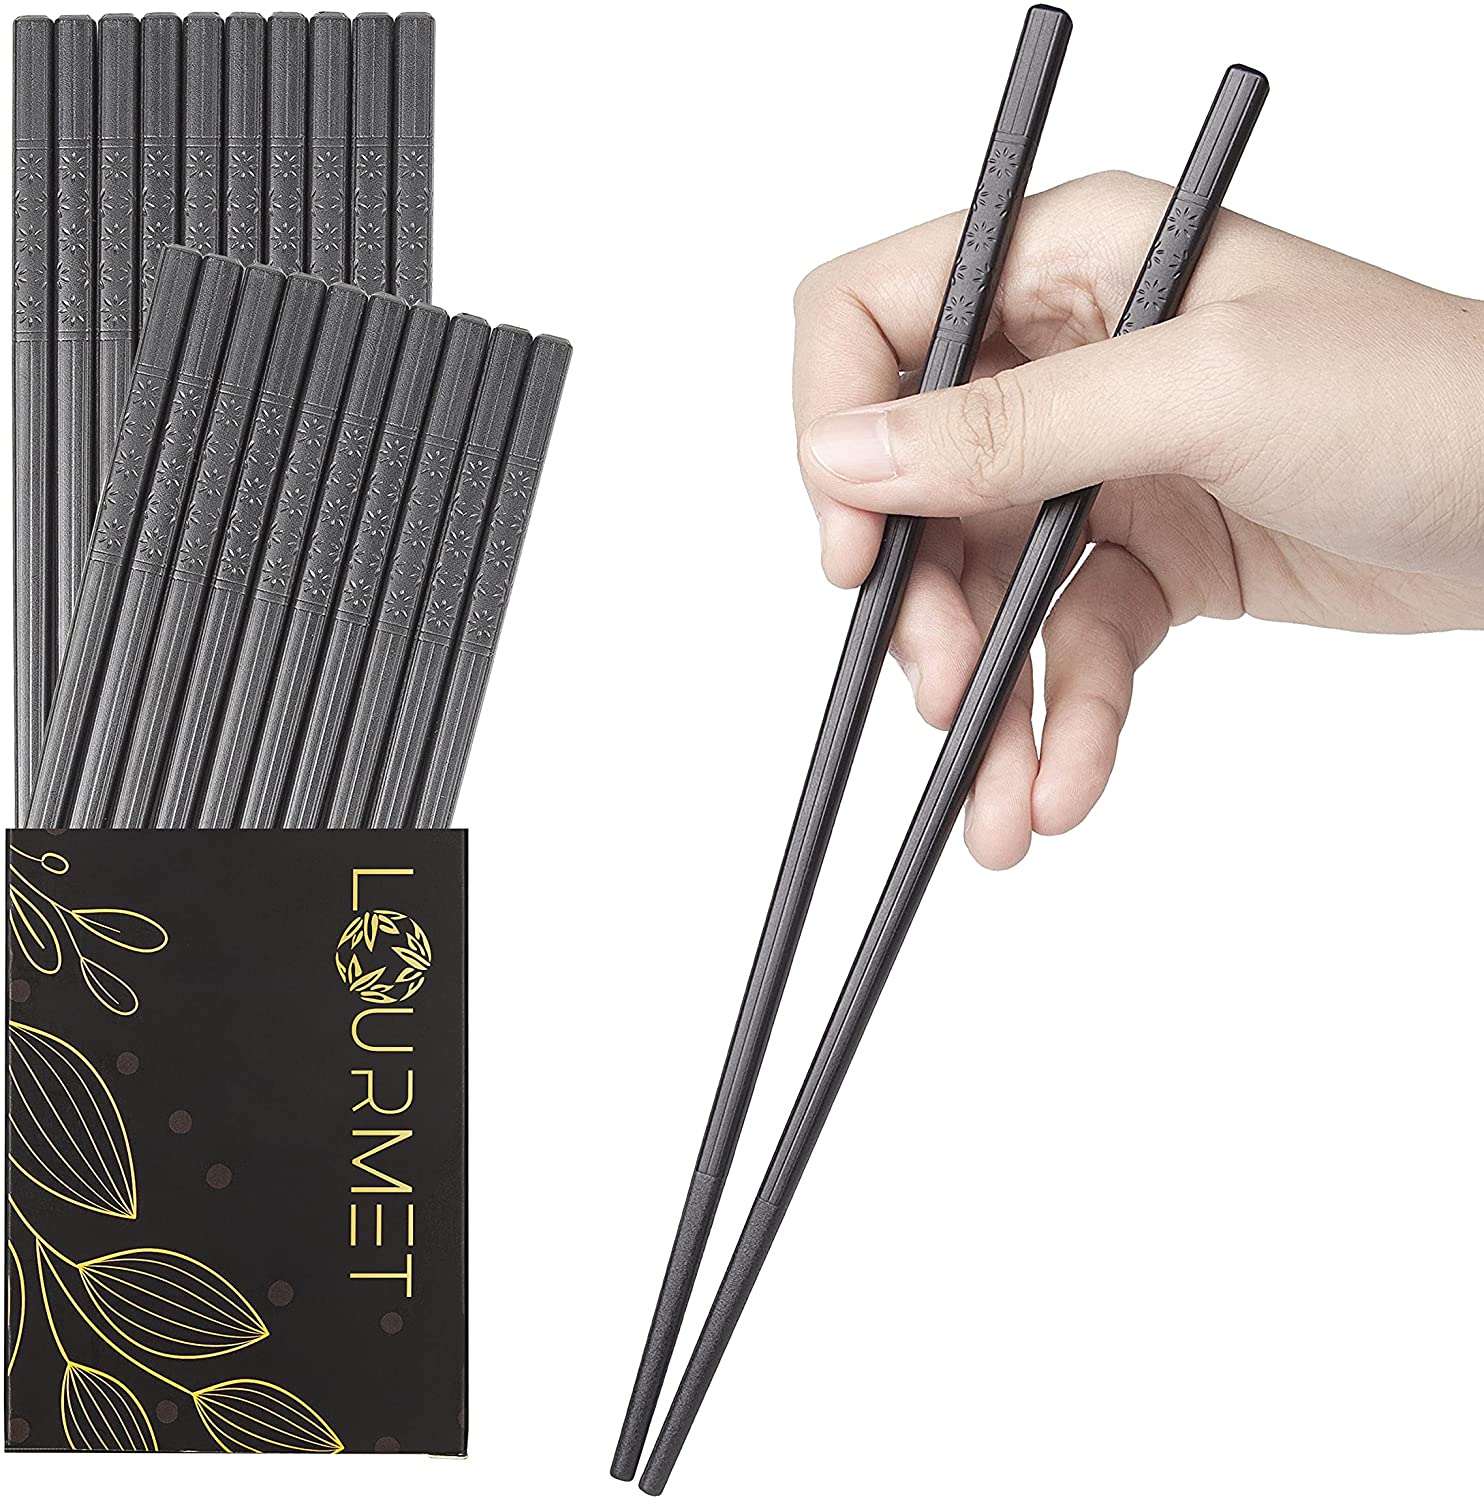 Lourmet Heat Resistant Fiberglass Chopsticks, 10-Pairs